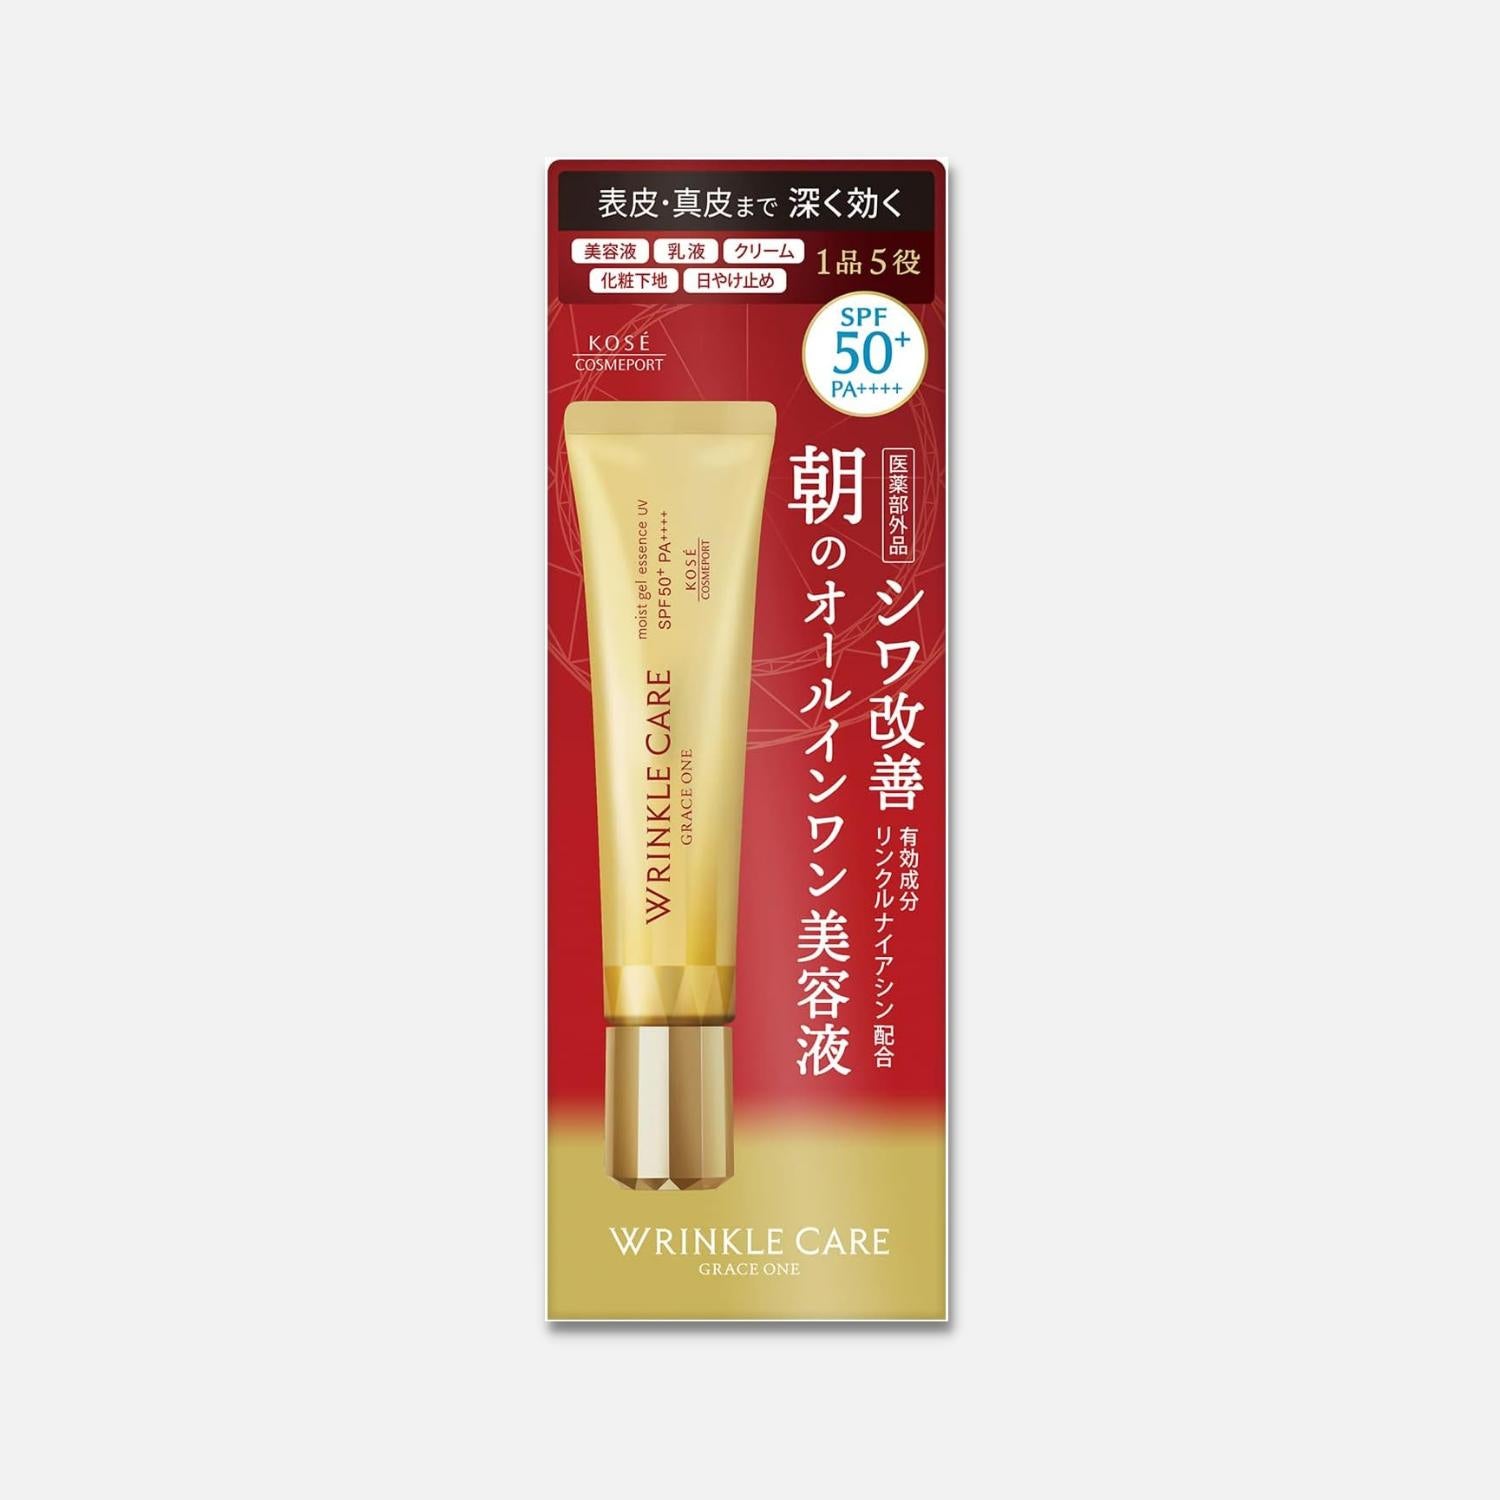 Kose Wrinkle Care Moist Gel Cream SPF 50+ PA++++ 40g - Buy Me Japan